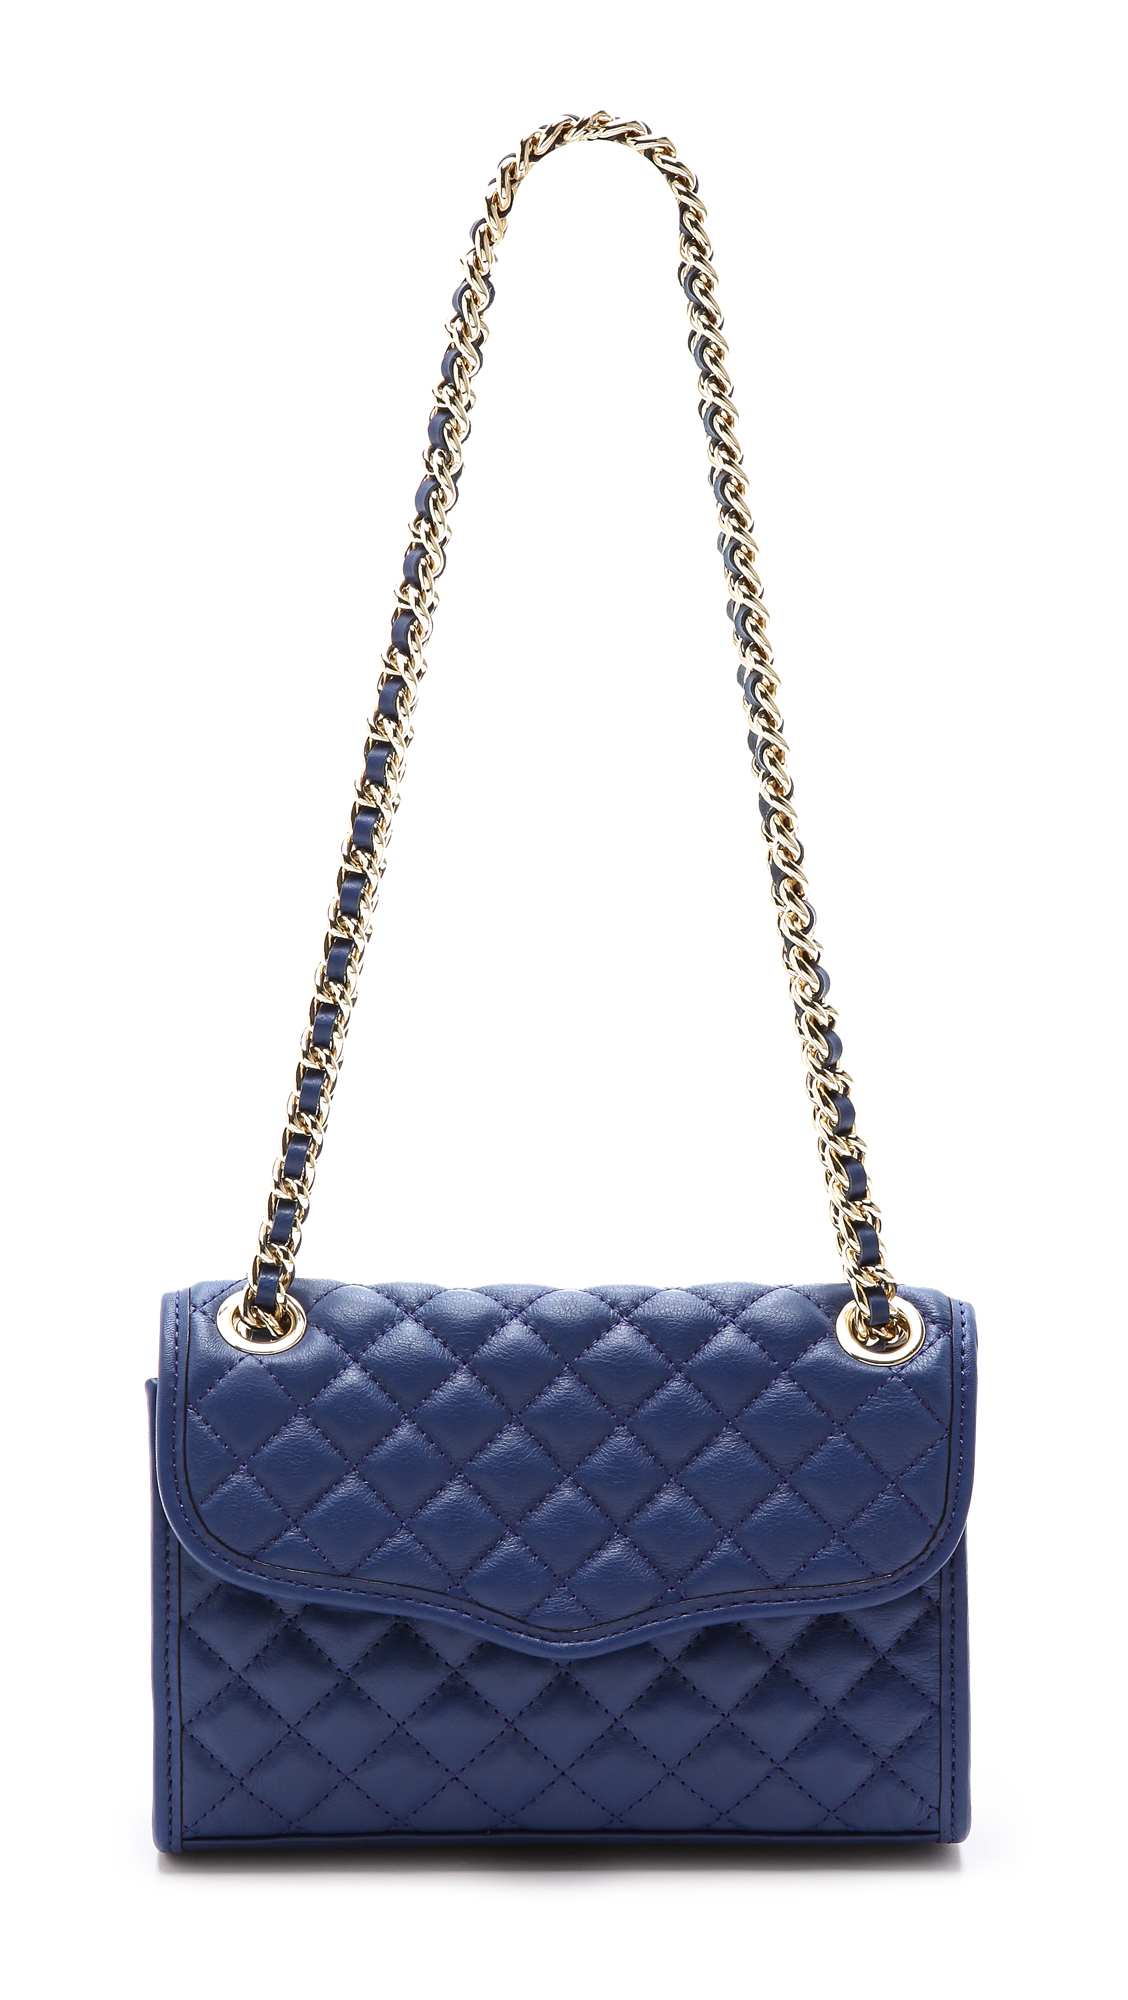 Lyst - Rebecca Minkoff Mini Quilted Affair Bag in Blue